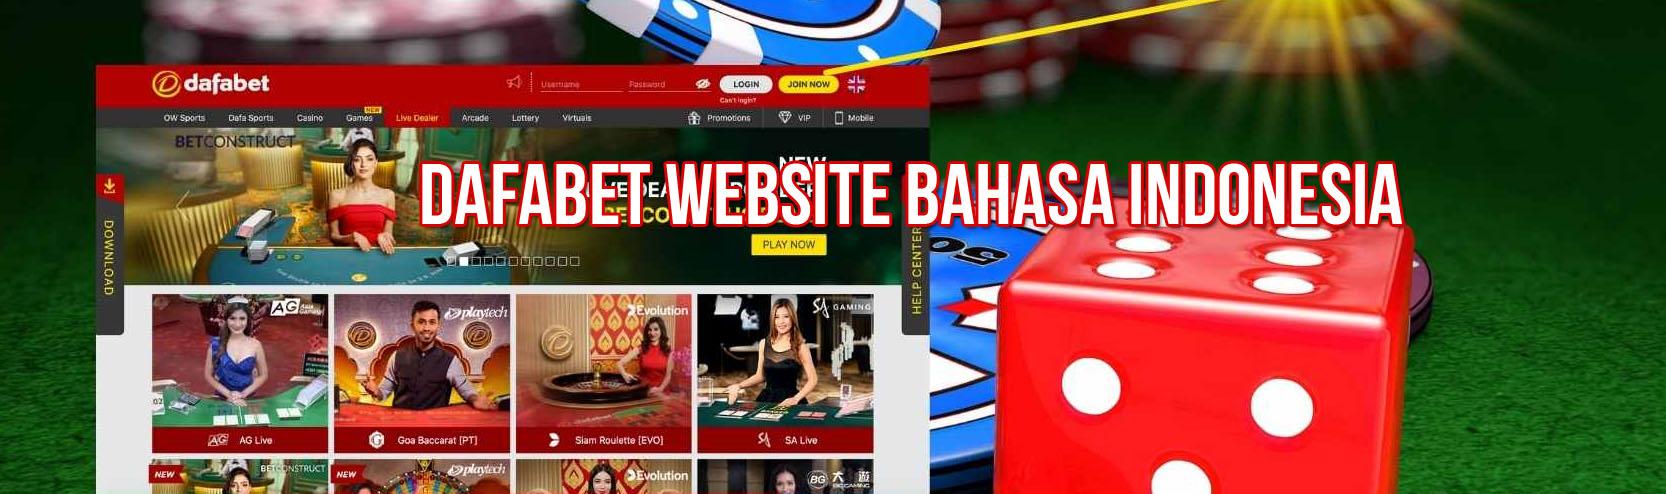 Dafabet Website